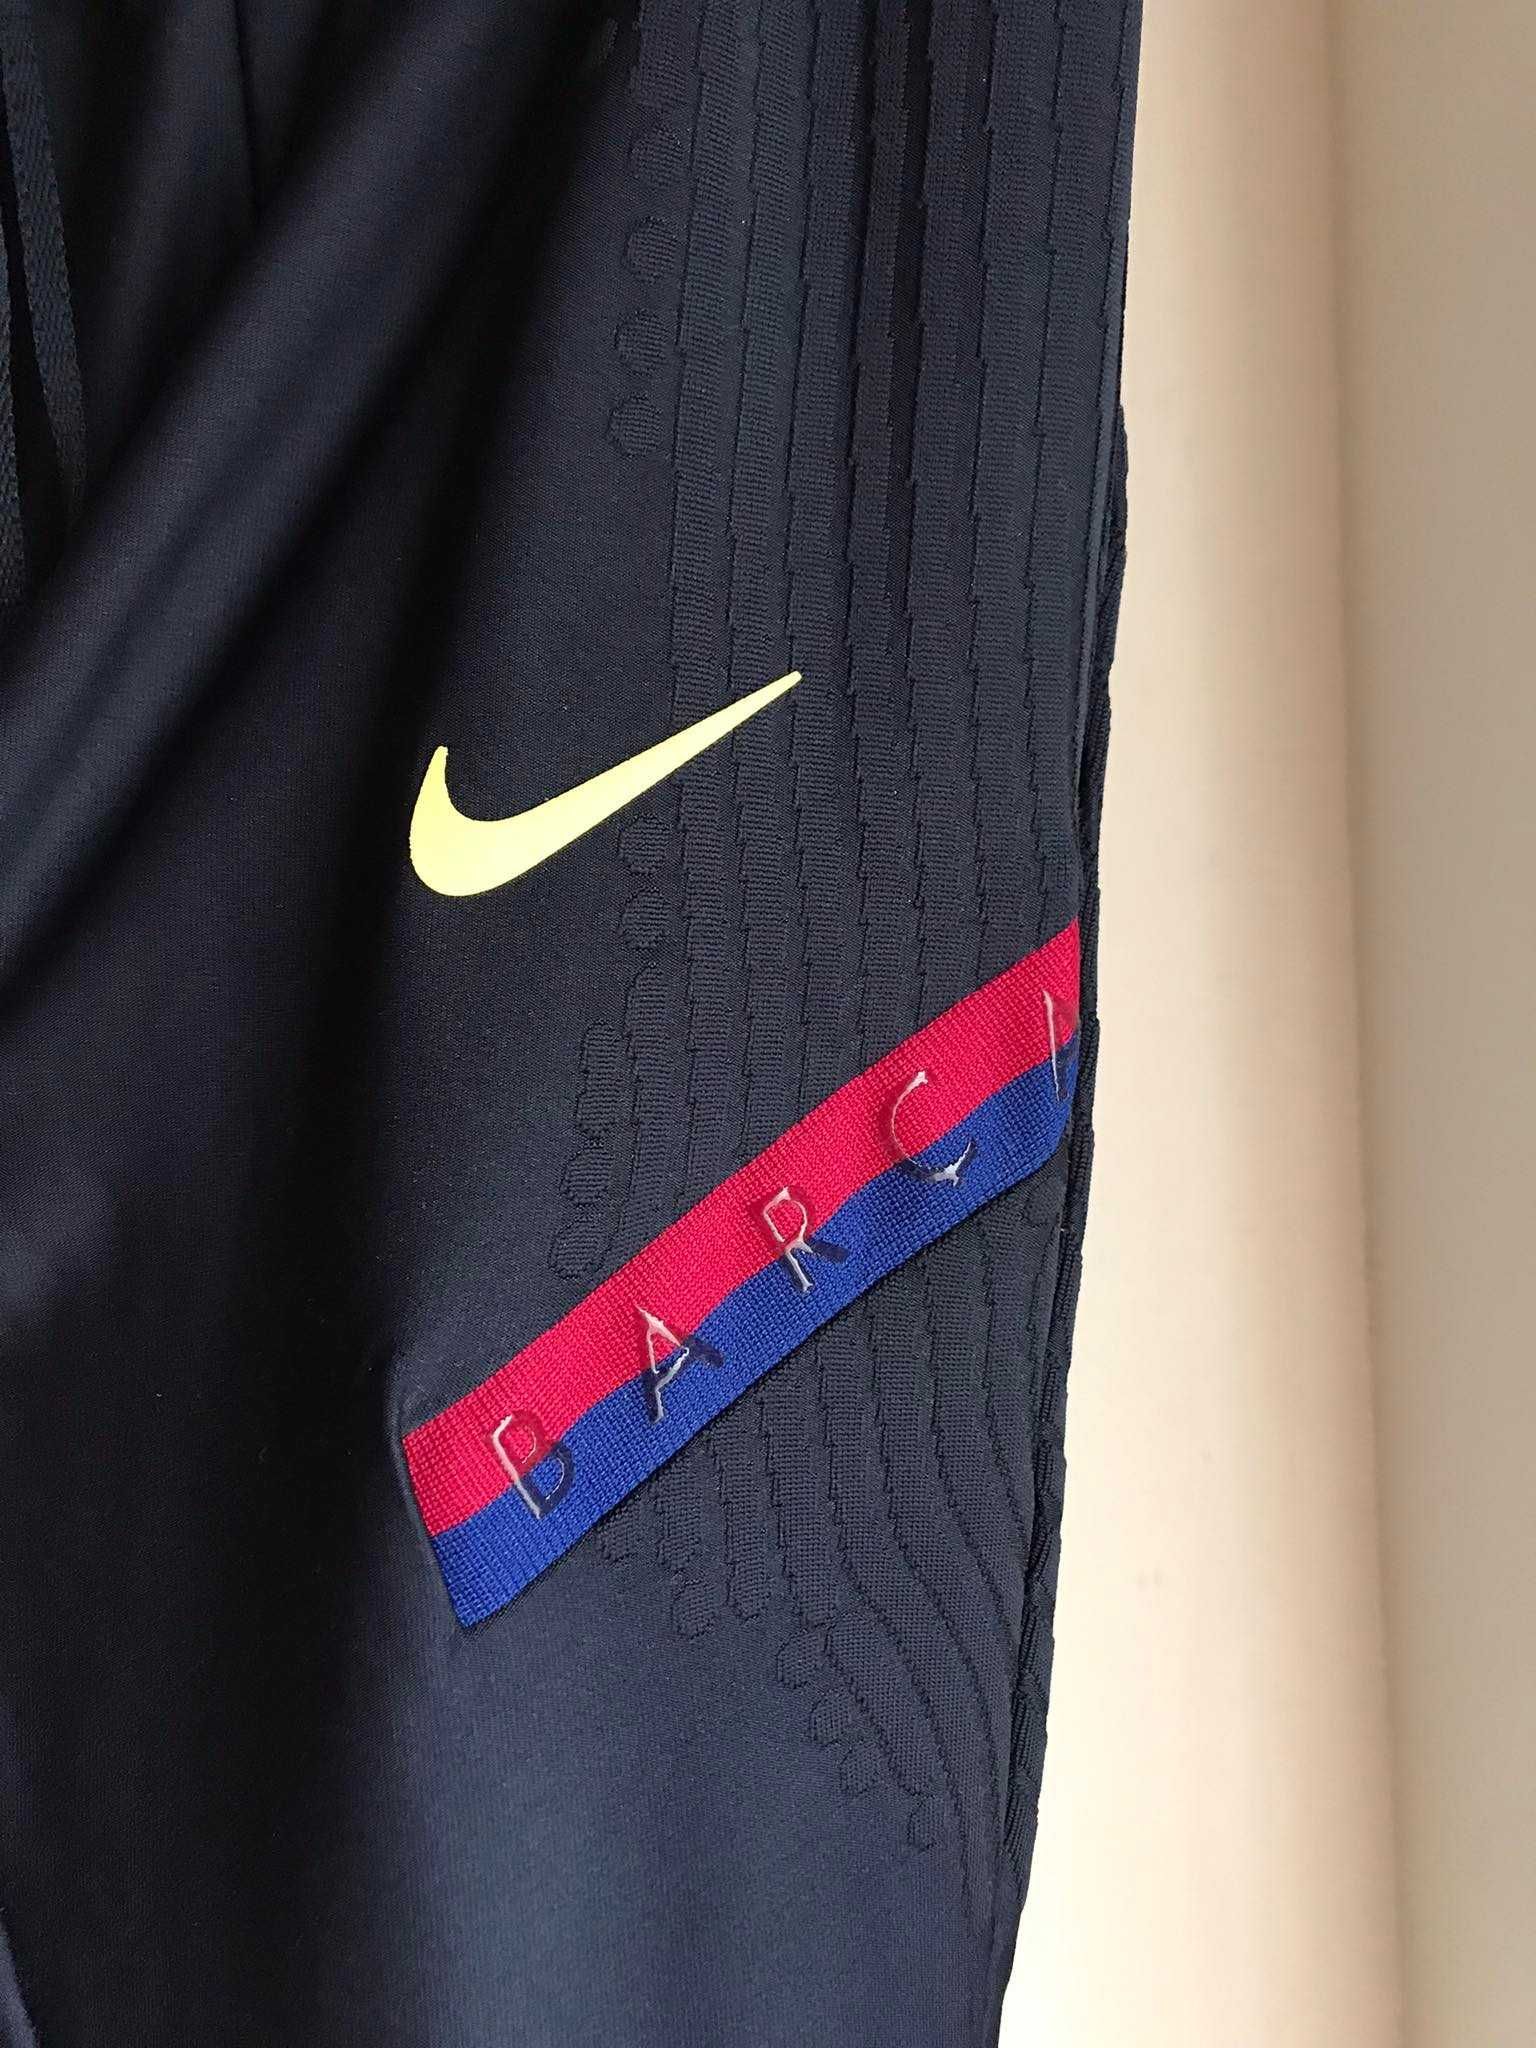 dry fit Barcelona la liga futebol camisola oficial Calças Nike dri fit